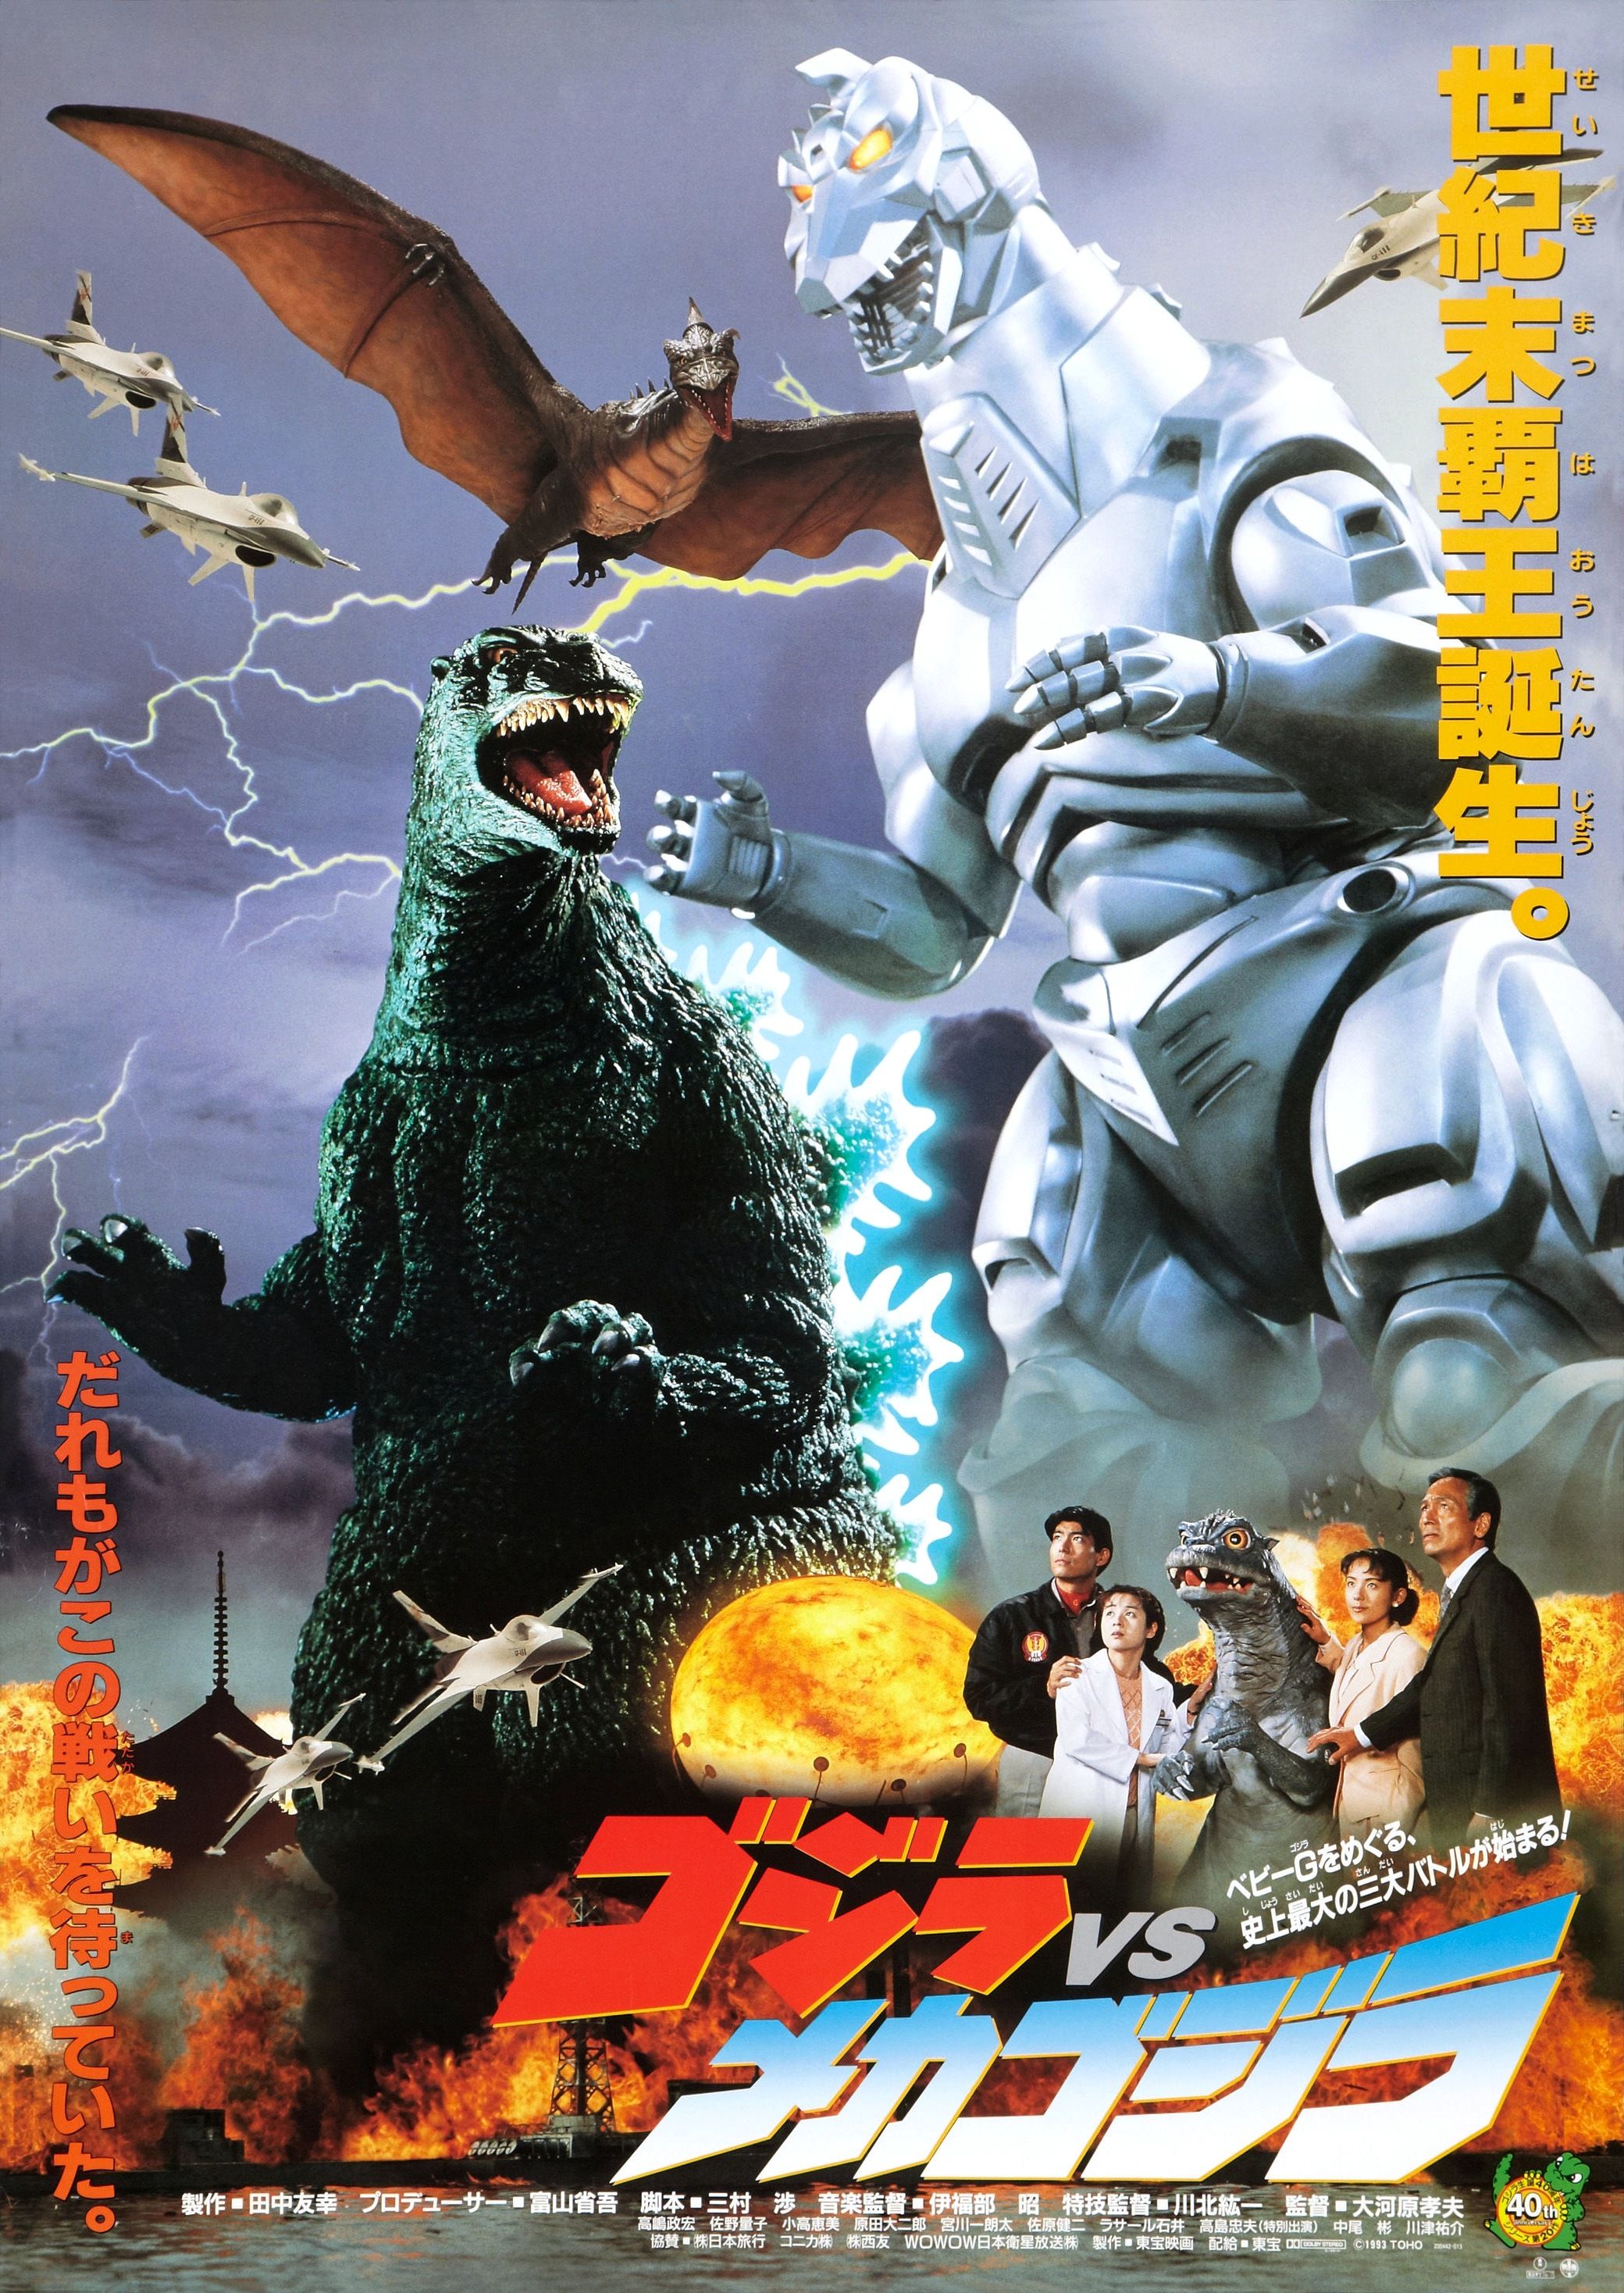 Godzilla-vs-mechagodzilla-movie-poster-1020433270.jpg